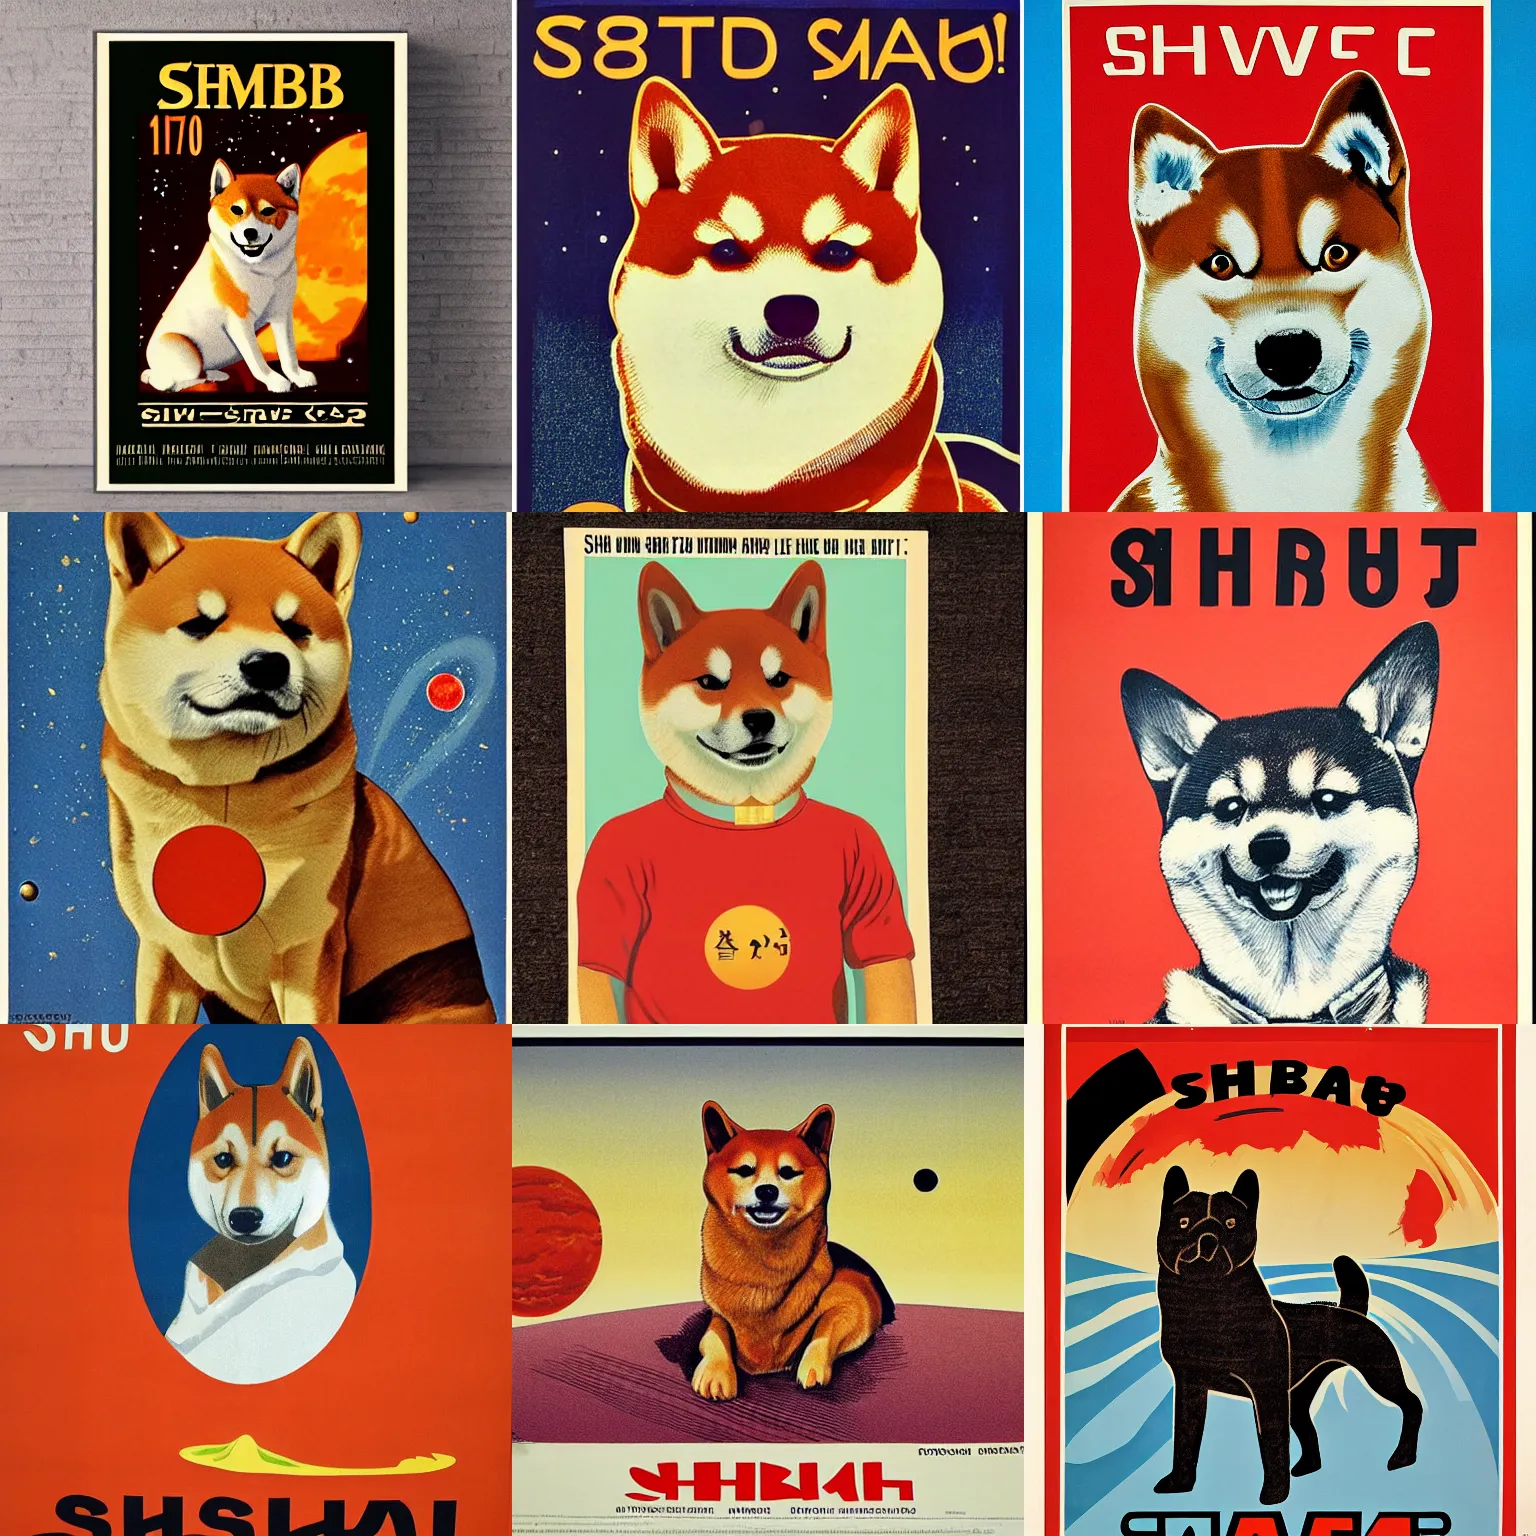 Prompt: Shiba Inu portrait, planet mars, 60s poster, 1972 Soviet